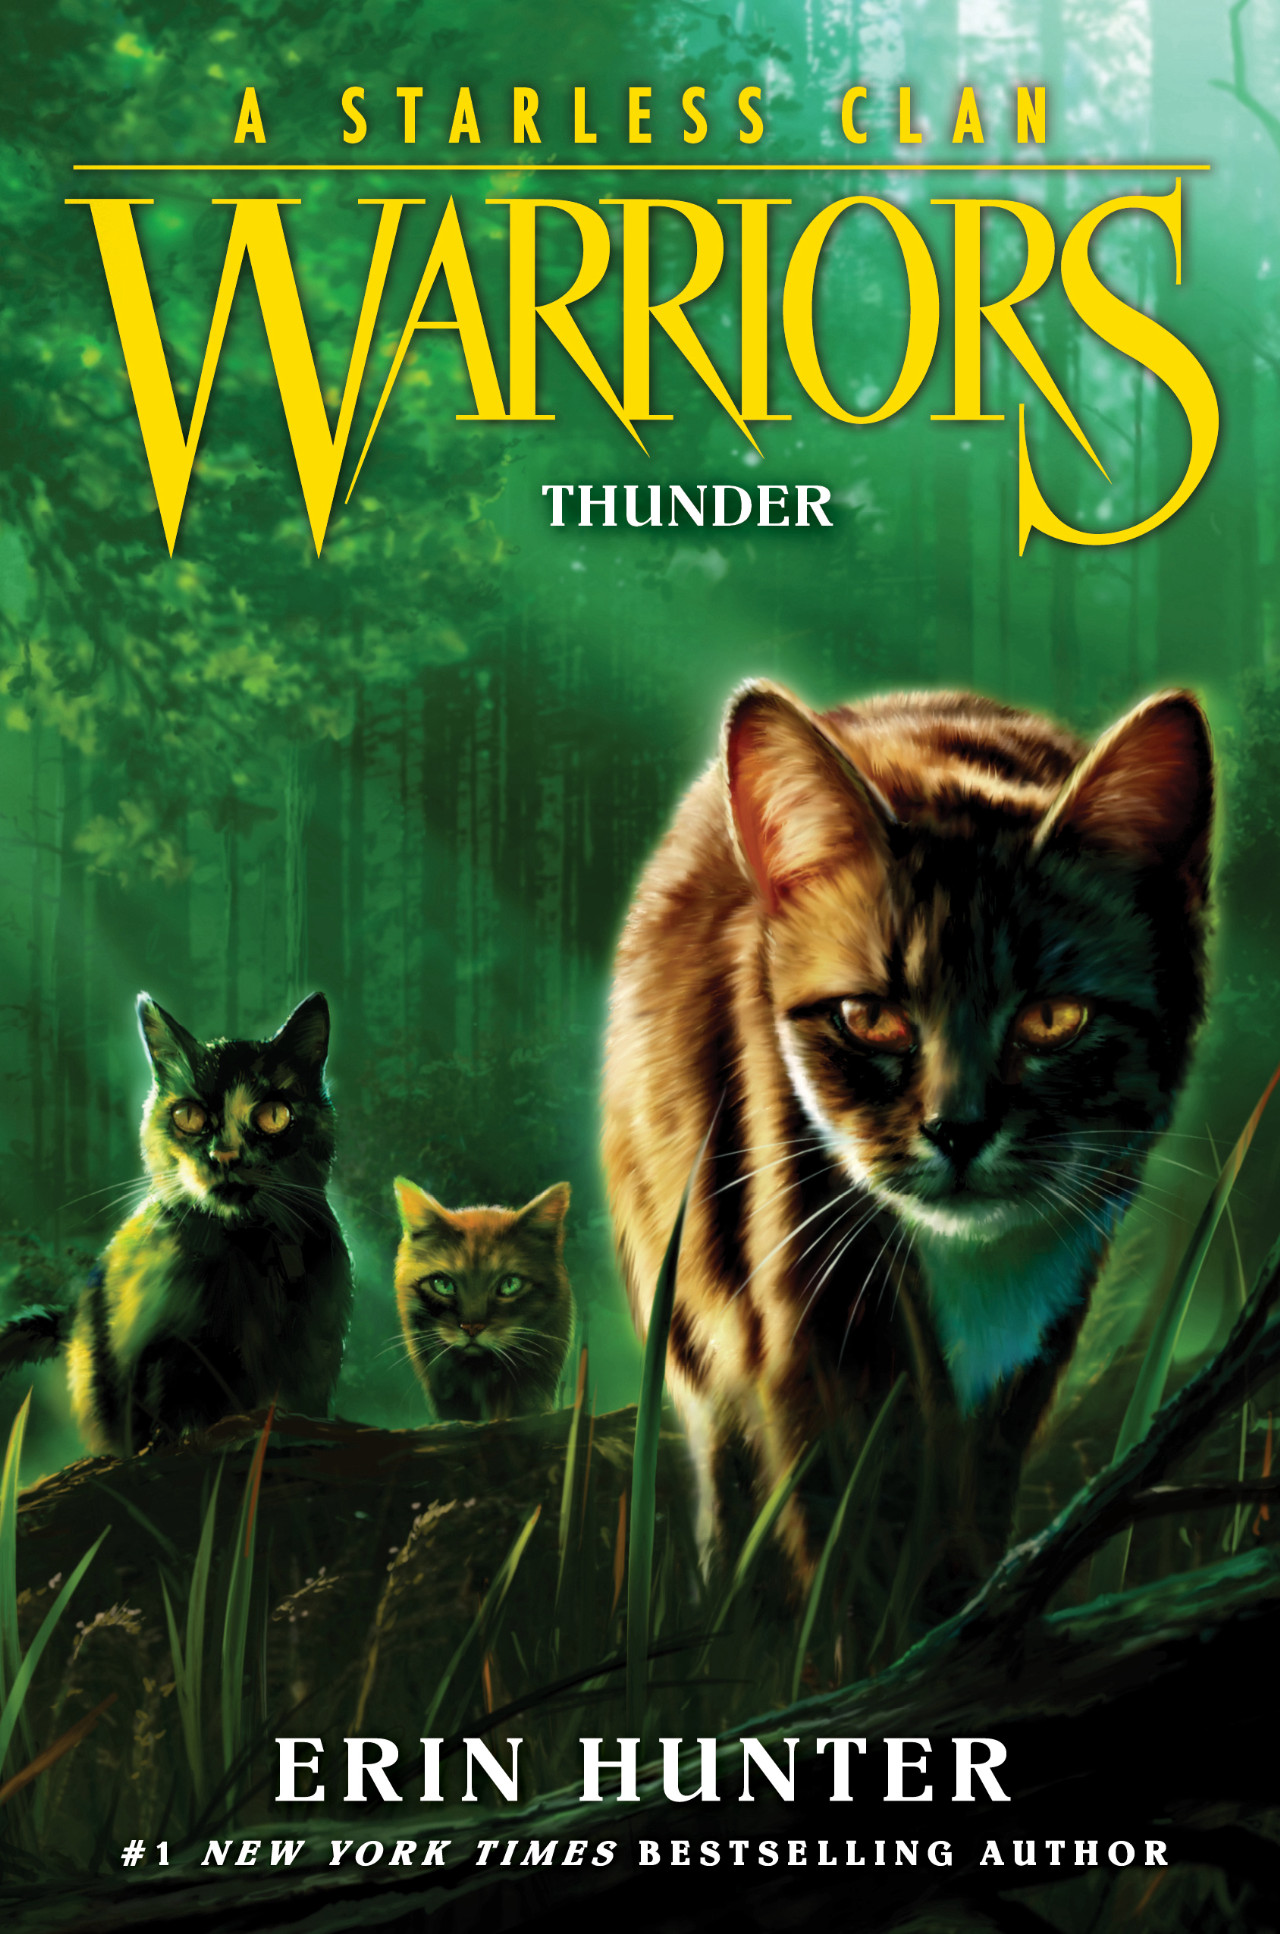 Books  Warrior Cats